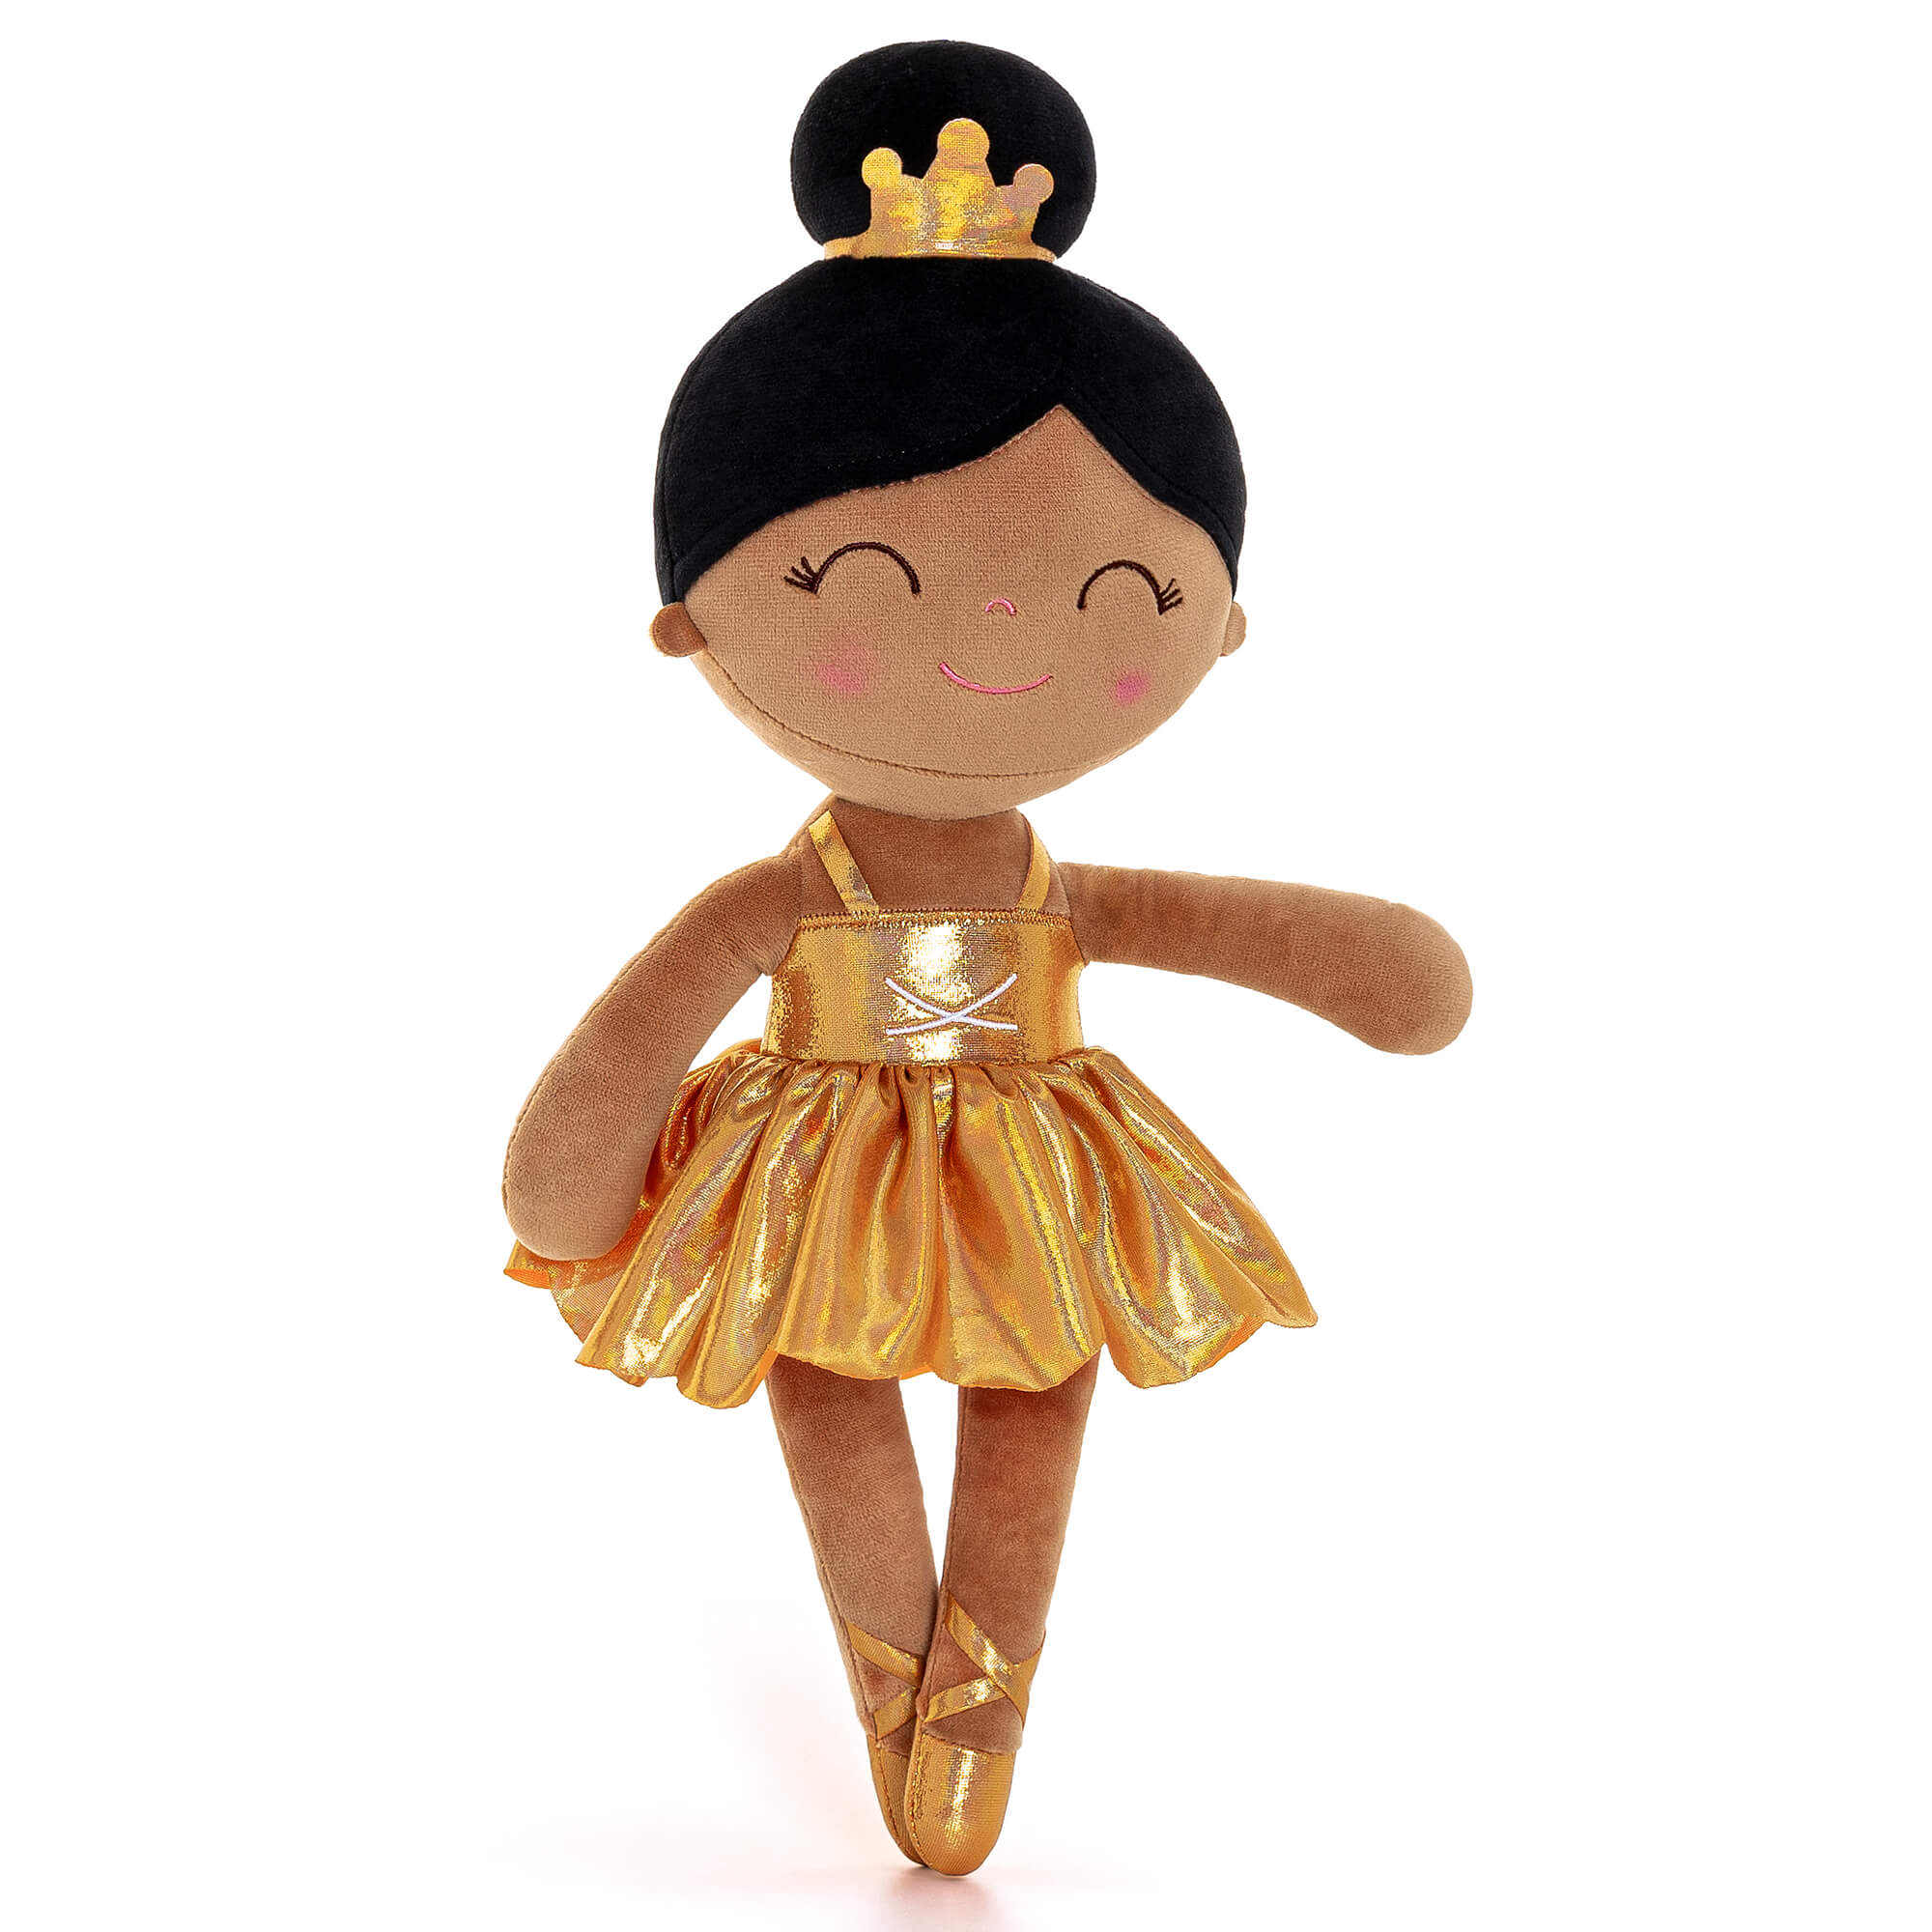 Gloveleya 13-inch Personalized Plush Dolls Iridescent Glitter Ballerina Series Tanned Gold - Gloveleya Offical